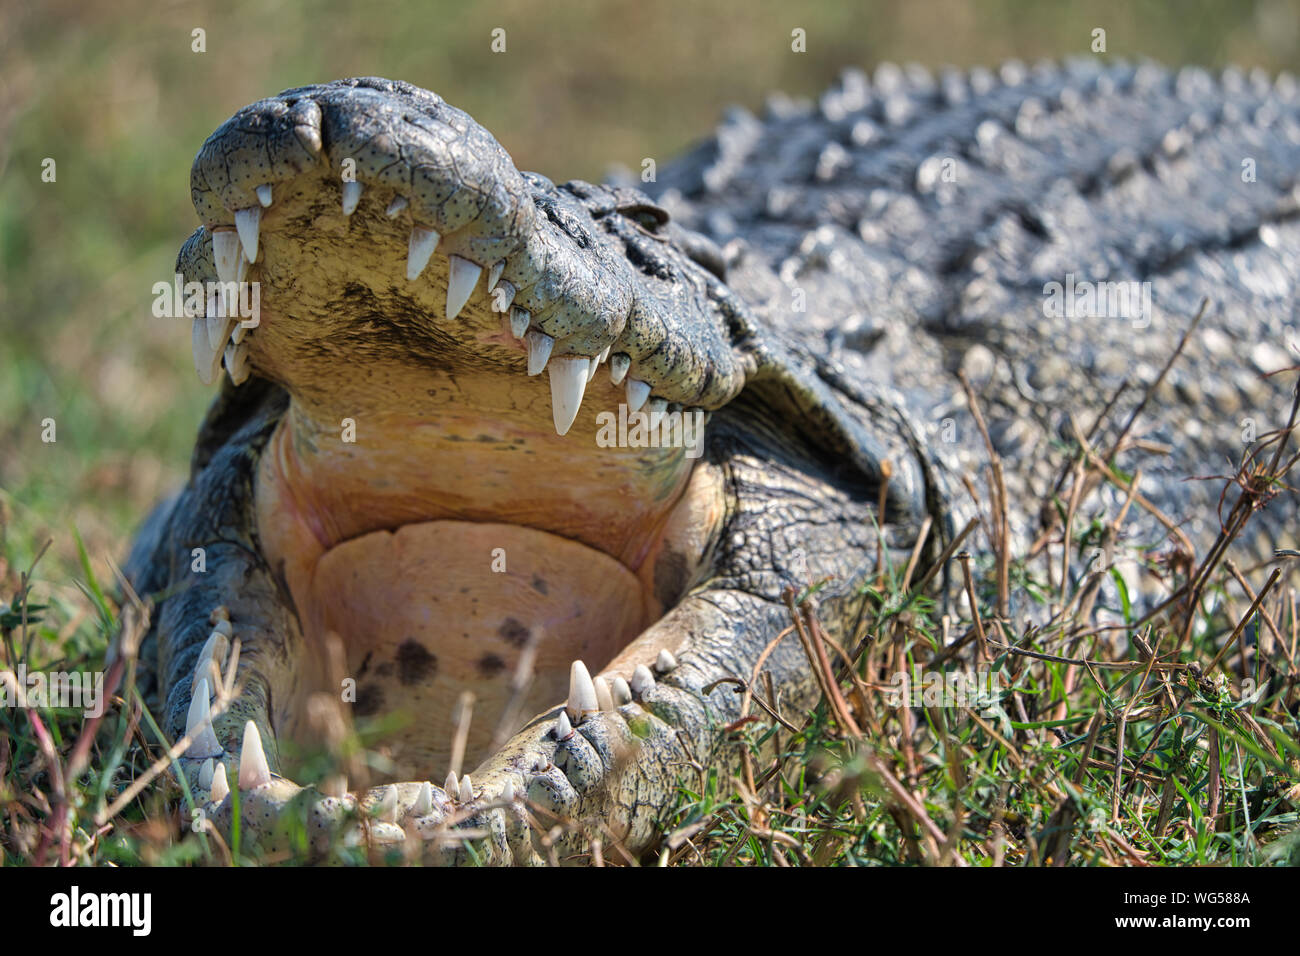 Crocodile in the wild, Chobe national park, Africa Stock Photo